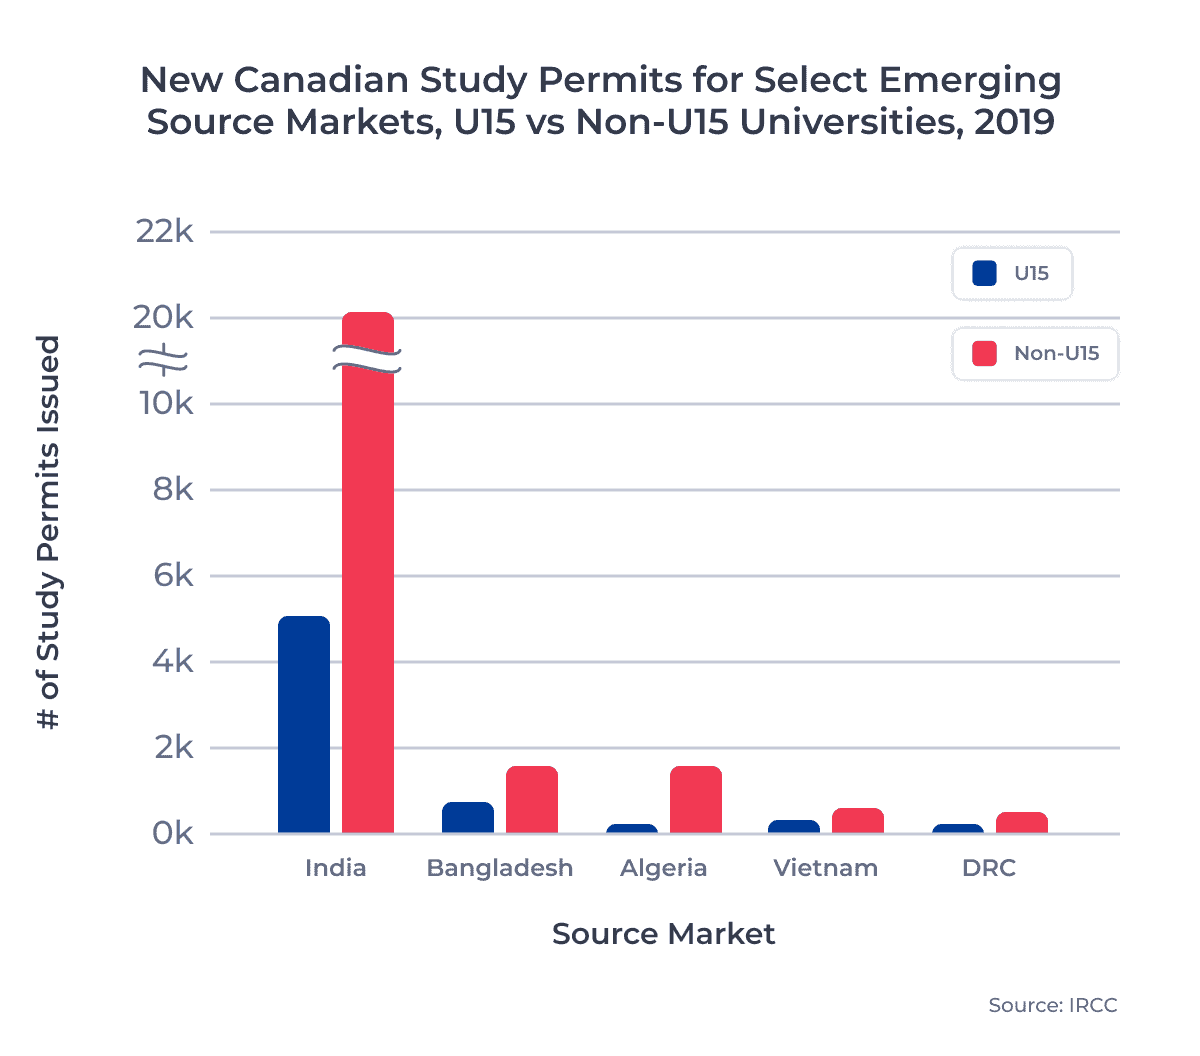 New Canadian Study Permits for Select Emerging Source Markets, U15 vs Non-U15 Universities, 2019